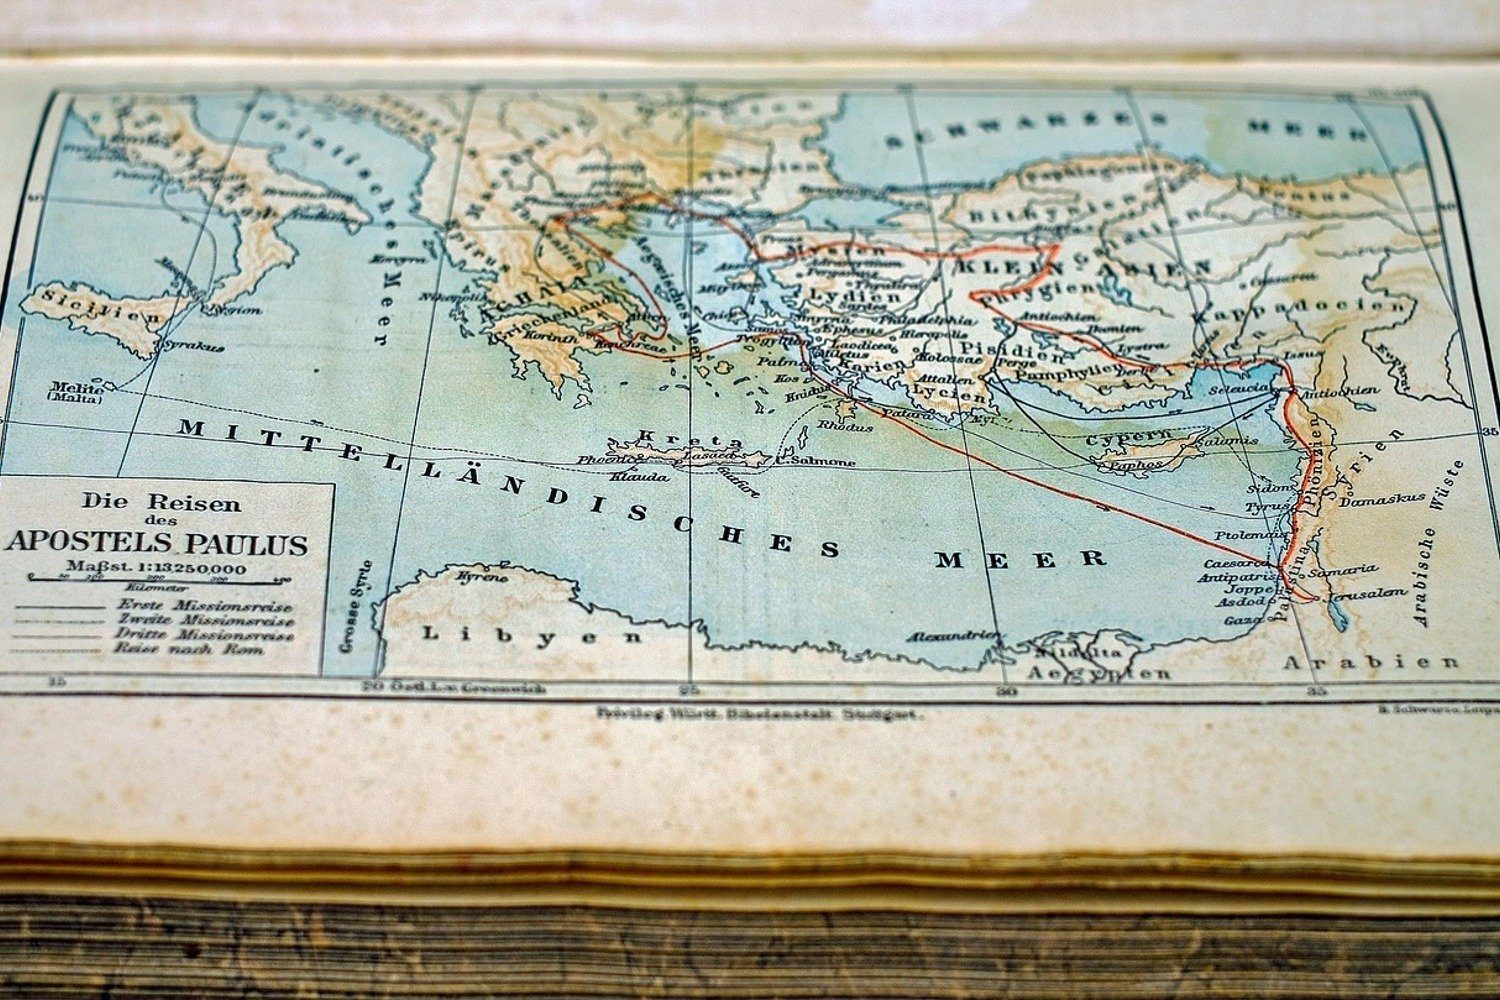 meberg Fototapete, Landkarte, Antik, Fototapete Landkarte Vliestapete cm 200x300 Wandbild Motiv Antike